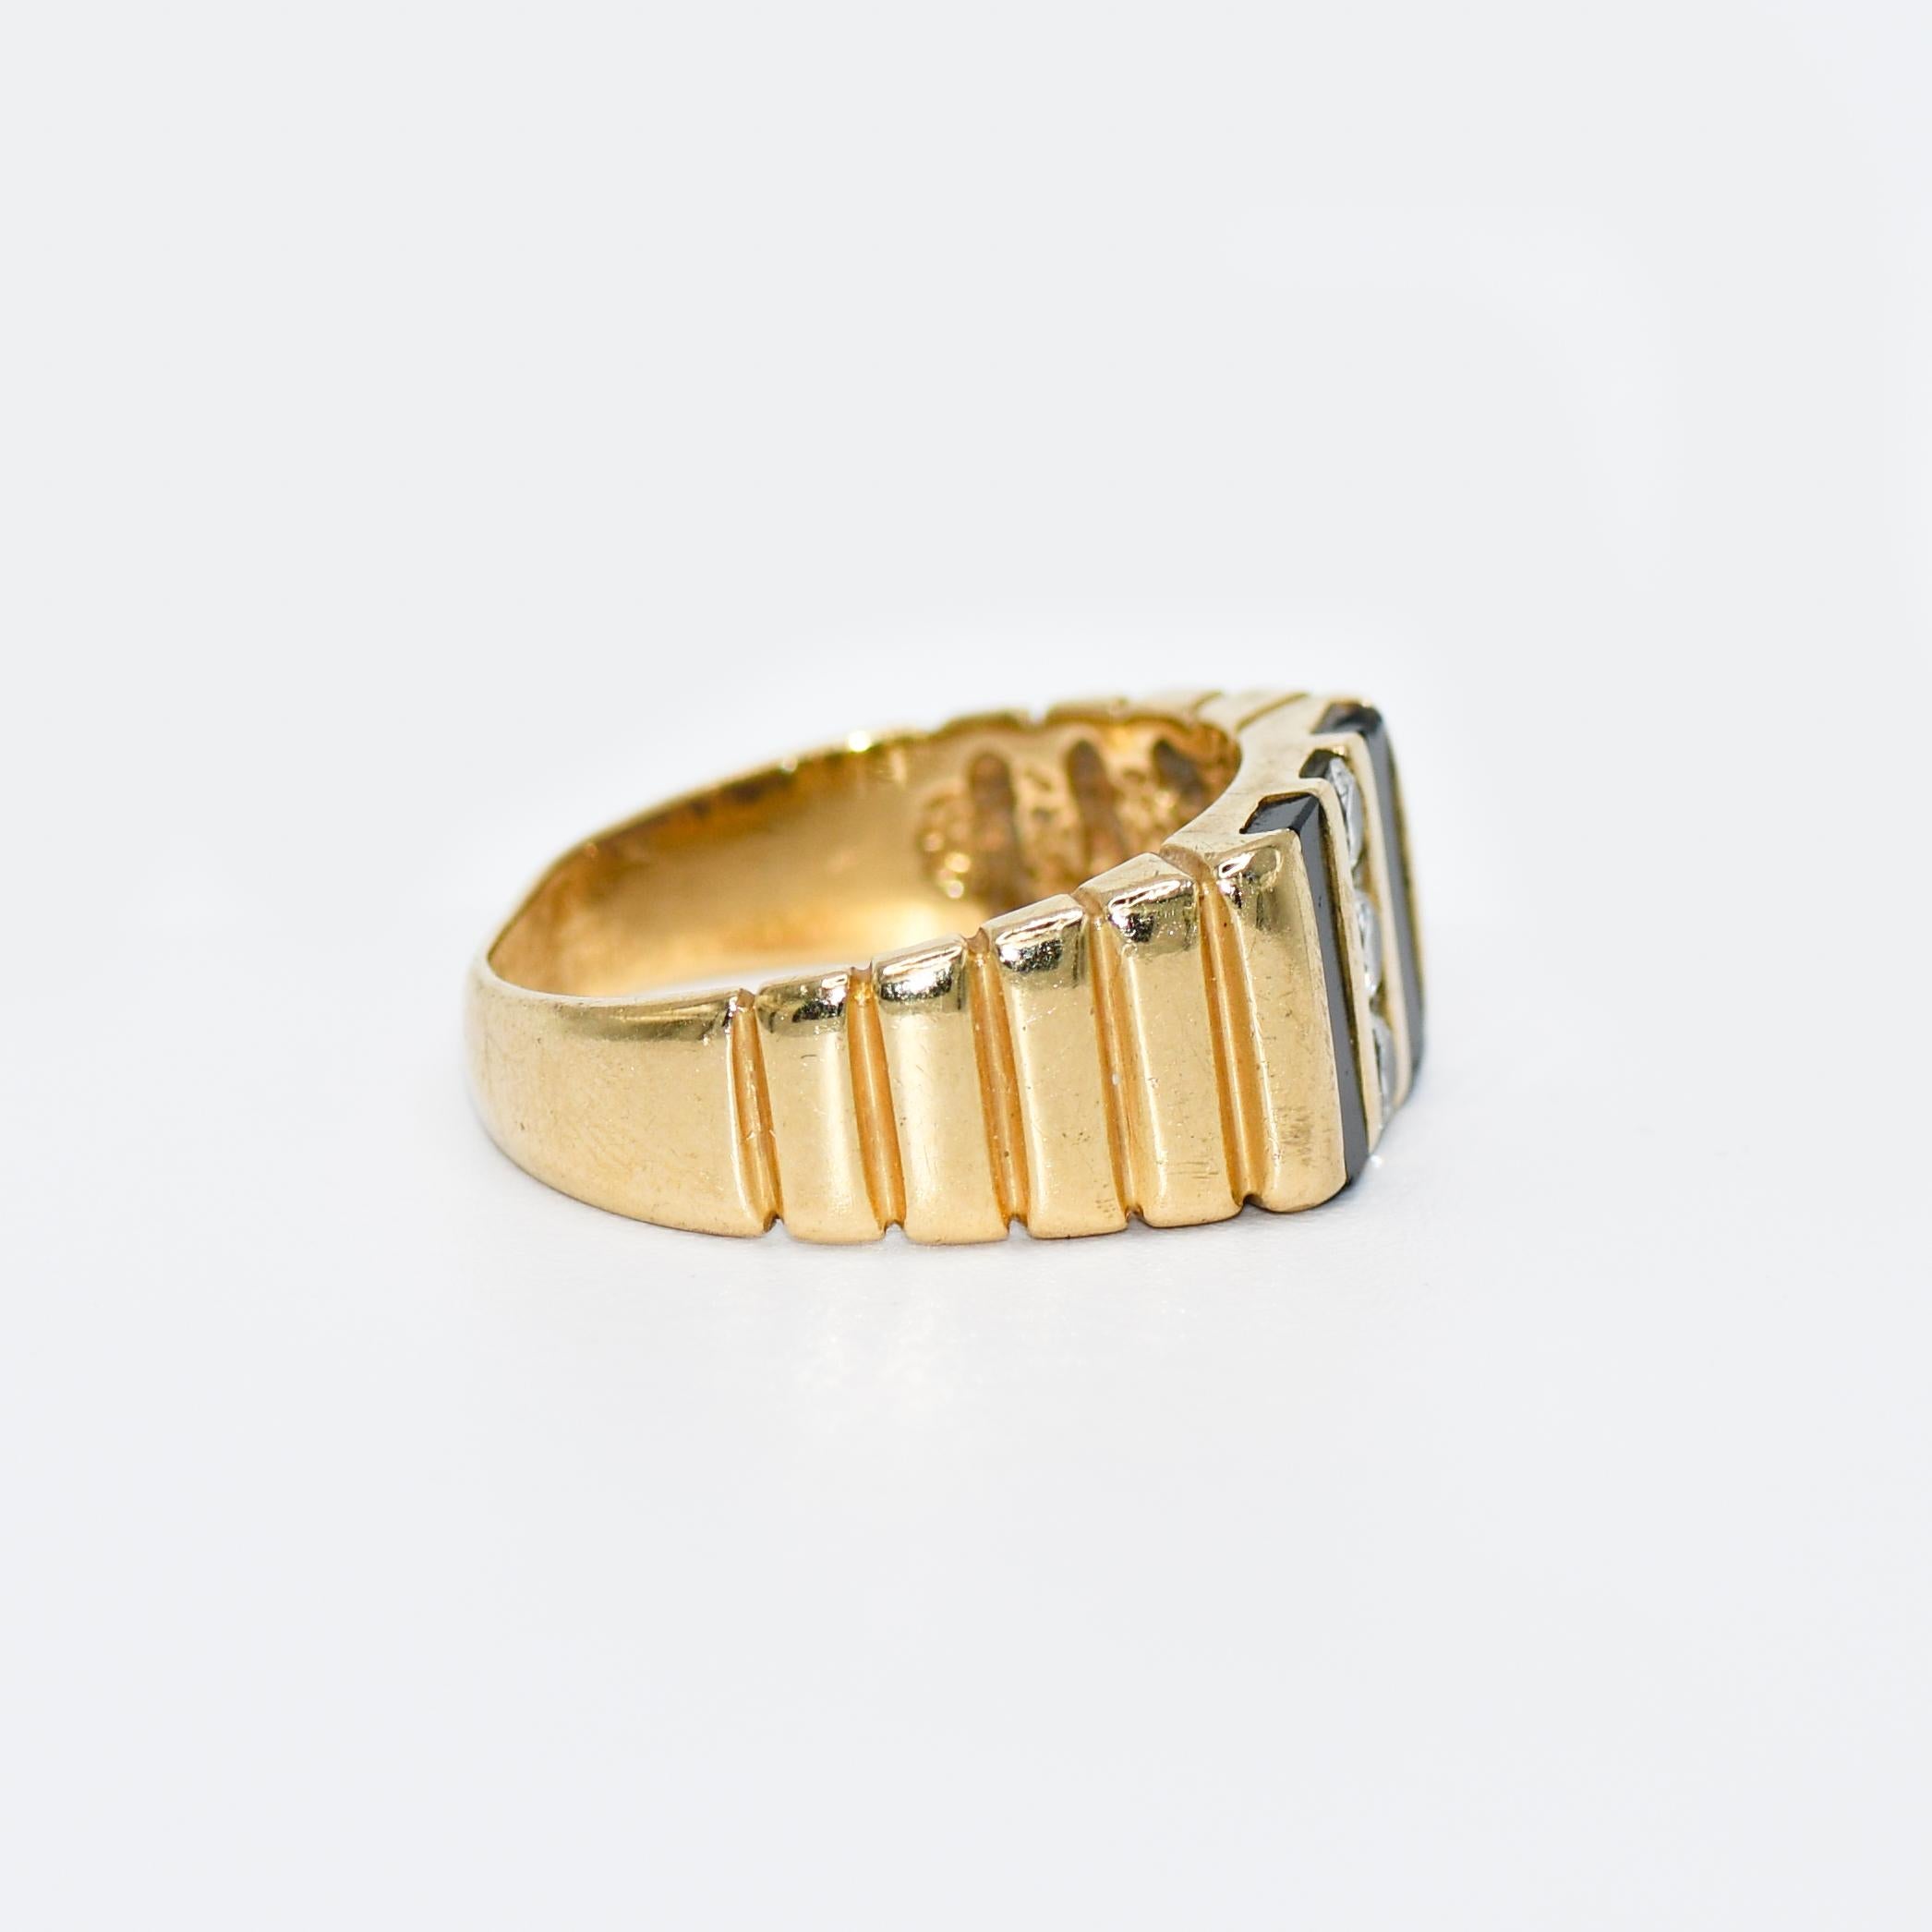 Brilliant Cut 14K Yellow Gold Diamond & Onyx Ring, 7.5gr, .25TDW For Sale